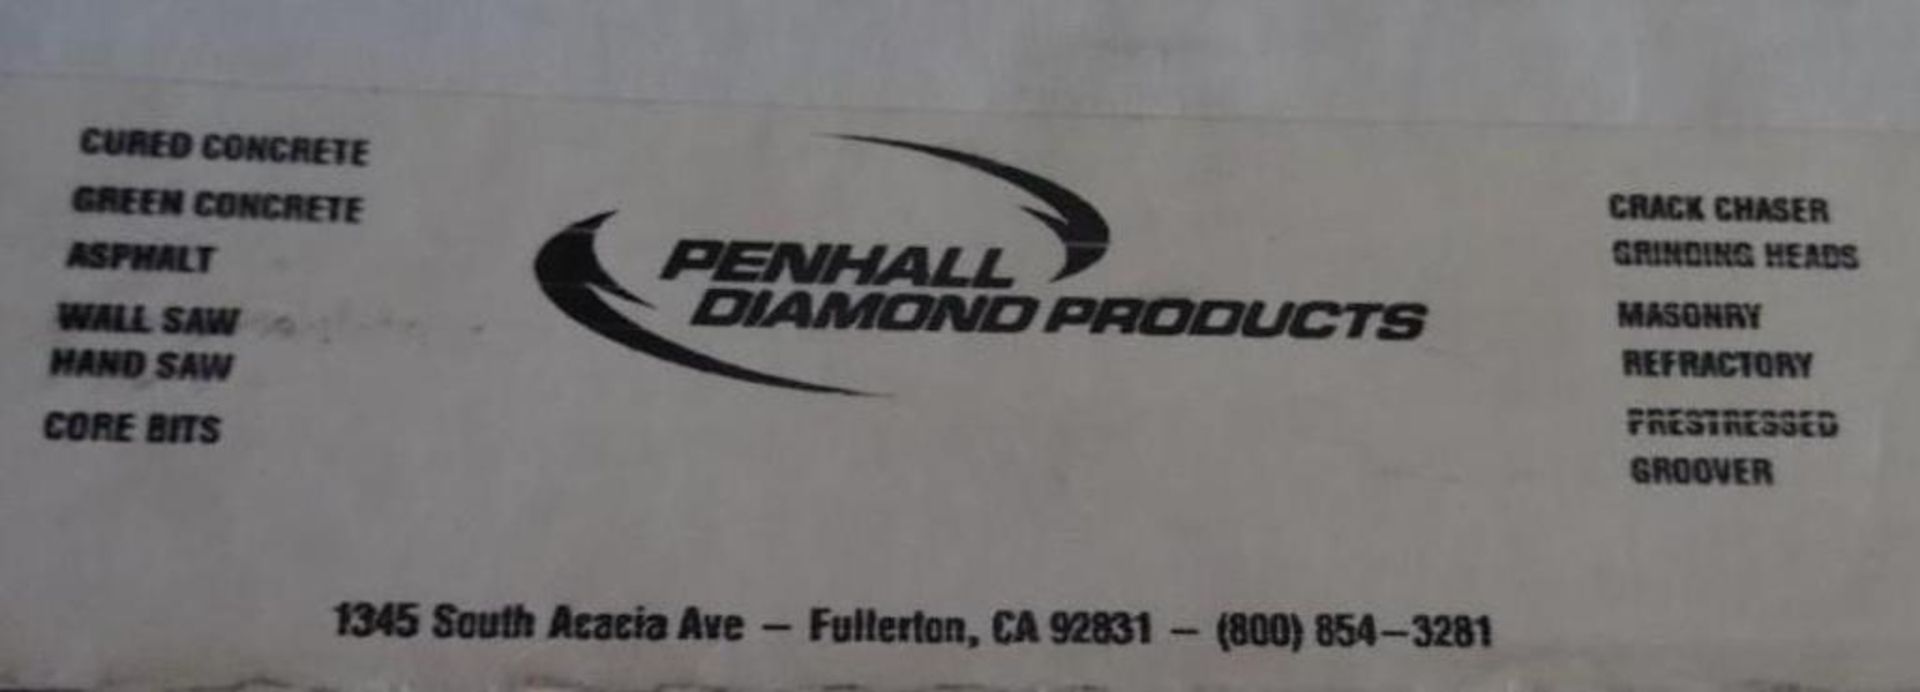 Penhall Diamond Products Saw Blade 30x190x1 1500RPM (BRAND NEW) - Image 3 of 3